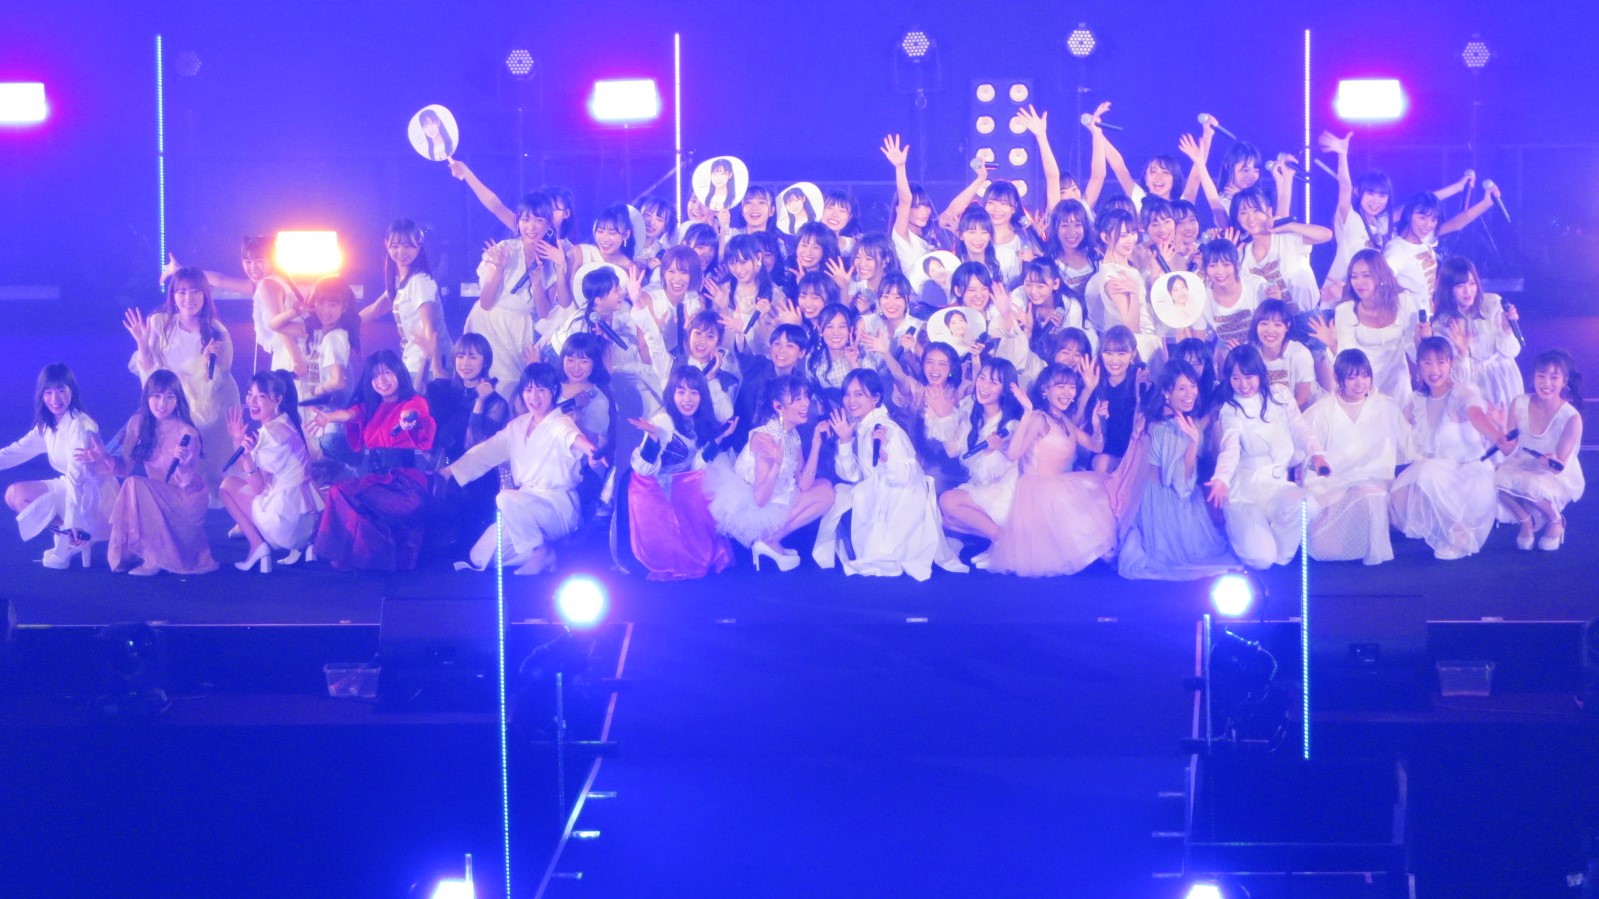 NMB48 10th Anniversary Live